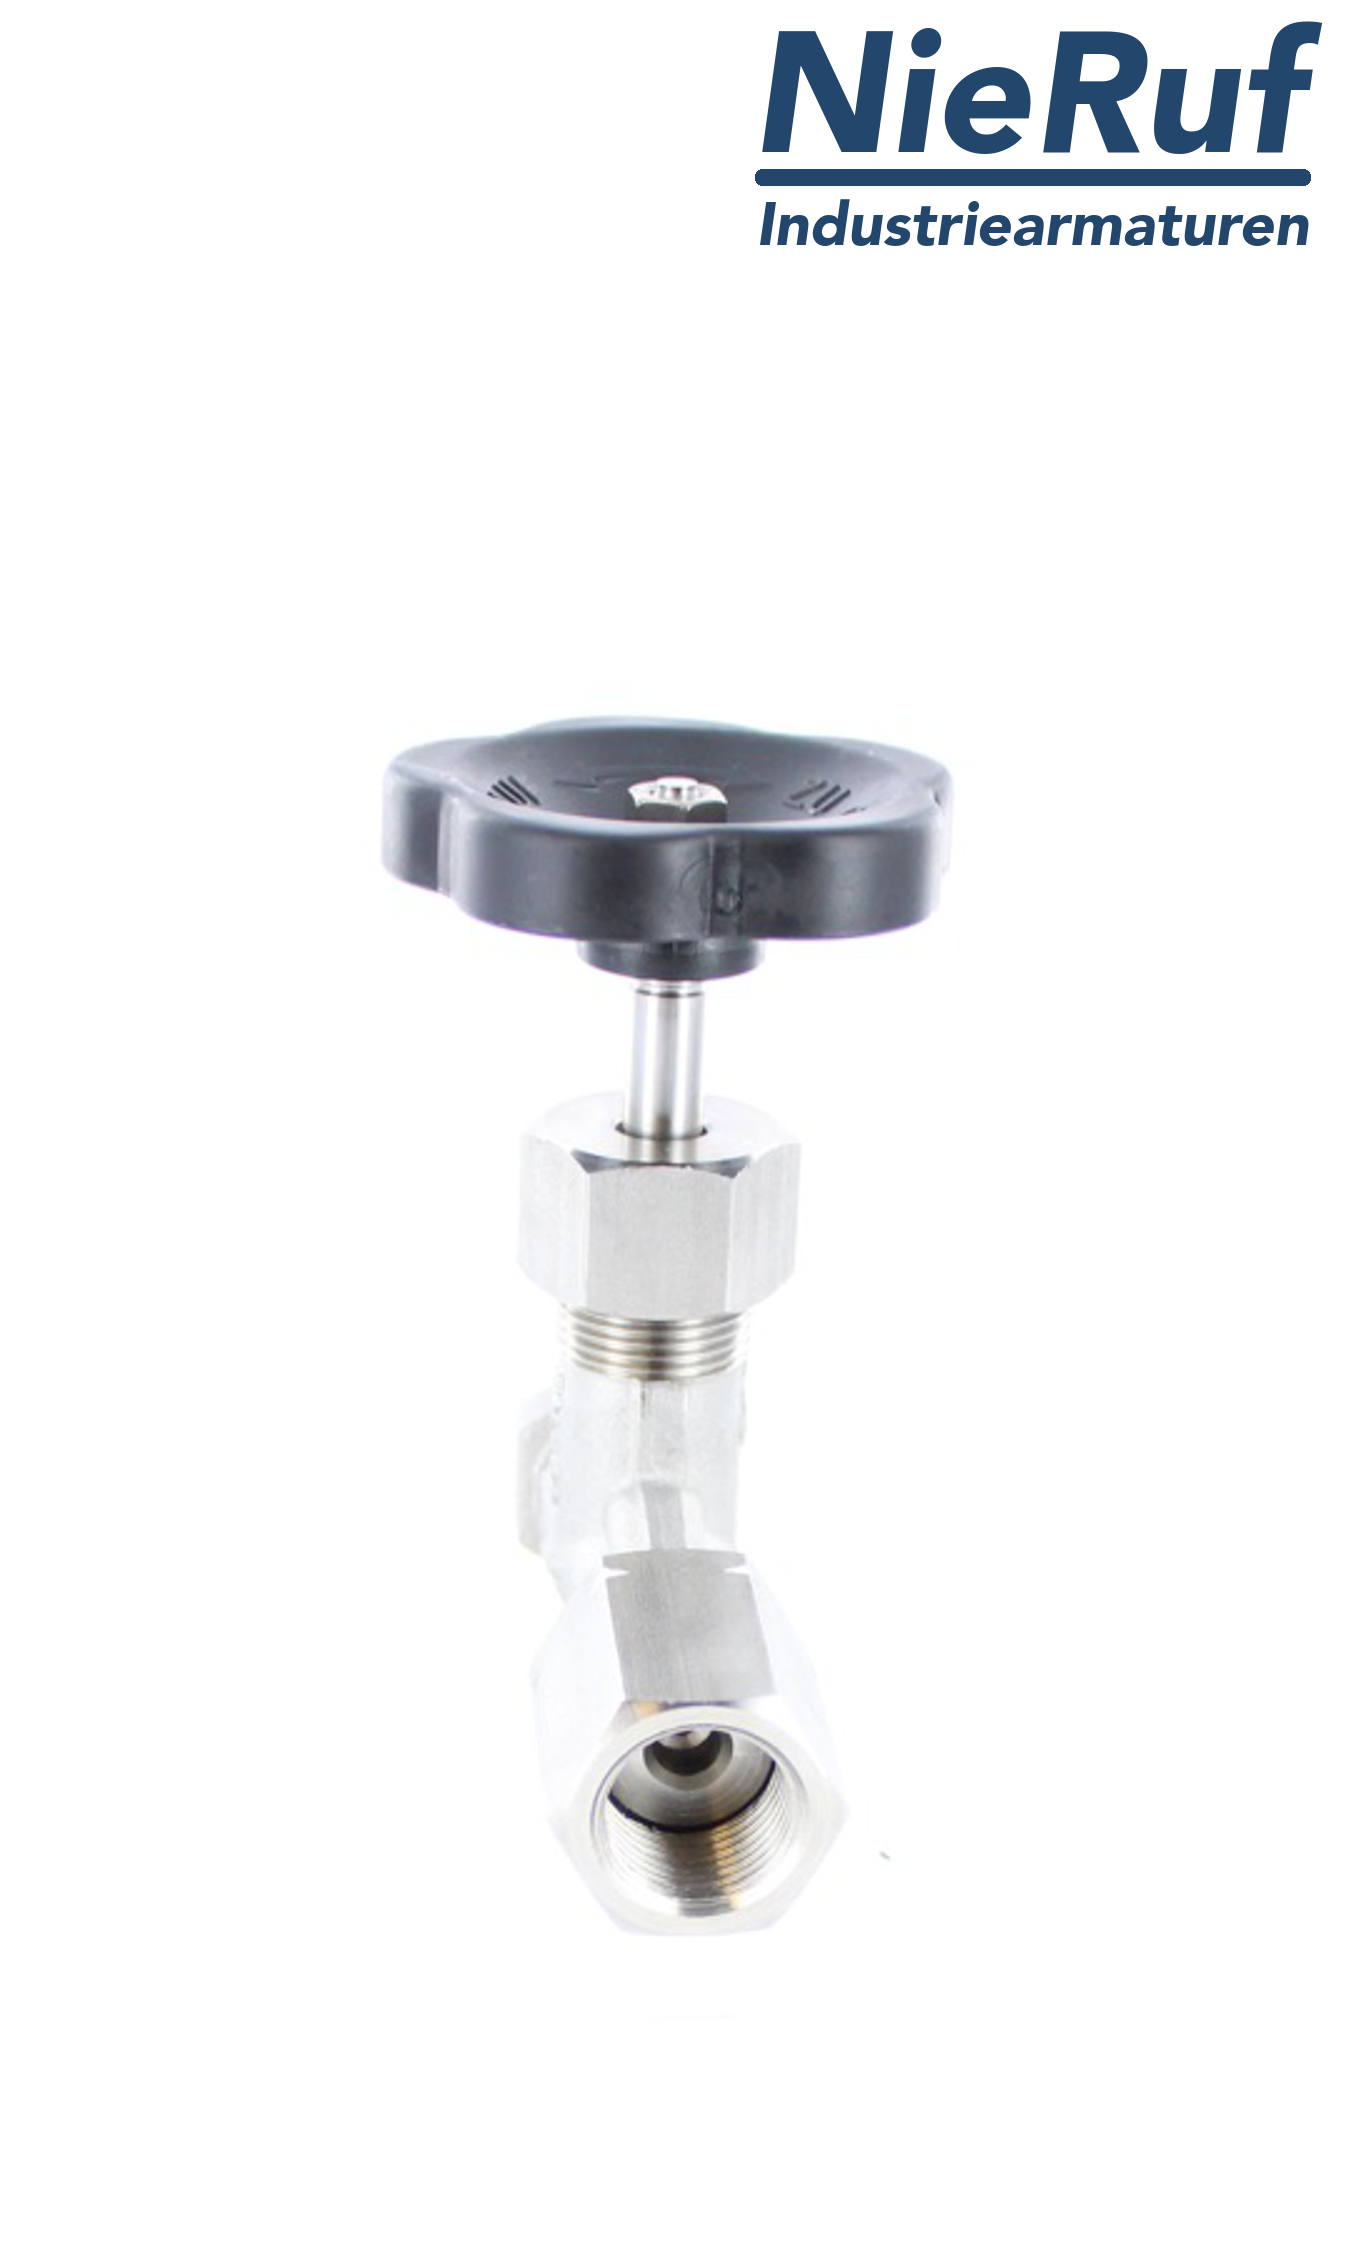 manometer gauge valves male thread x sleeve DIN 16270 stainless steel 1.4571 400 bar